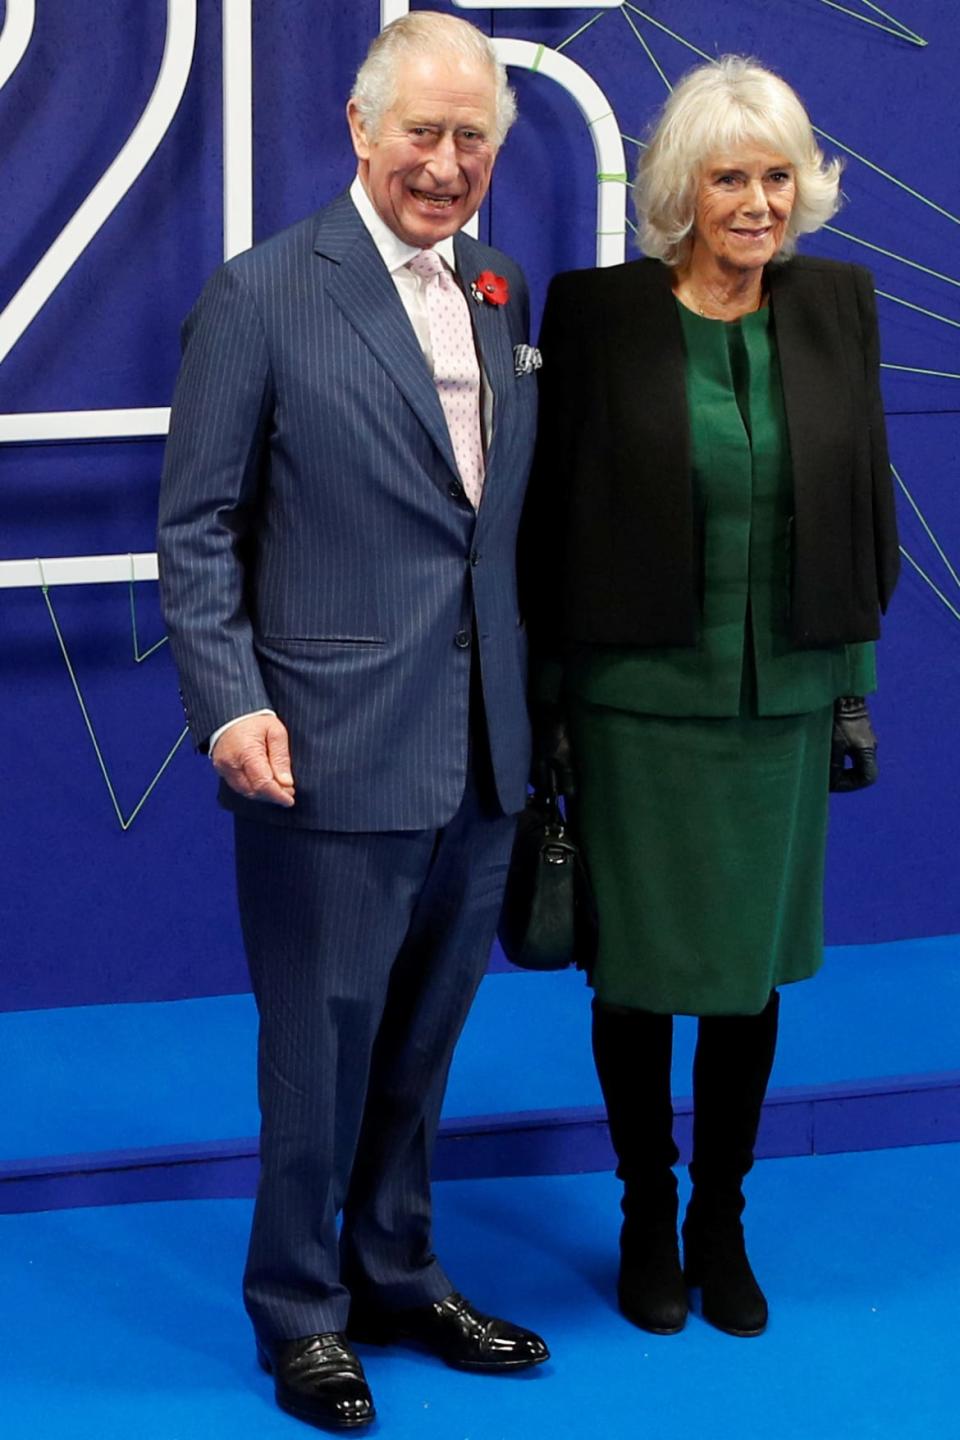 <div class="inline-image__caption"><p>Princes Charles and Camilla arrive at COP26.</p></div> <div class="inline-image__credit">Phil Noble</div>